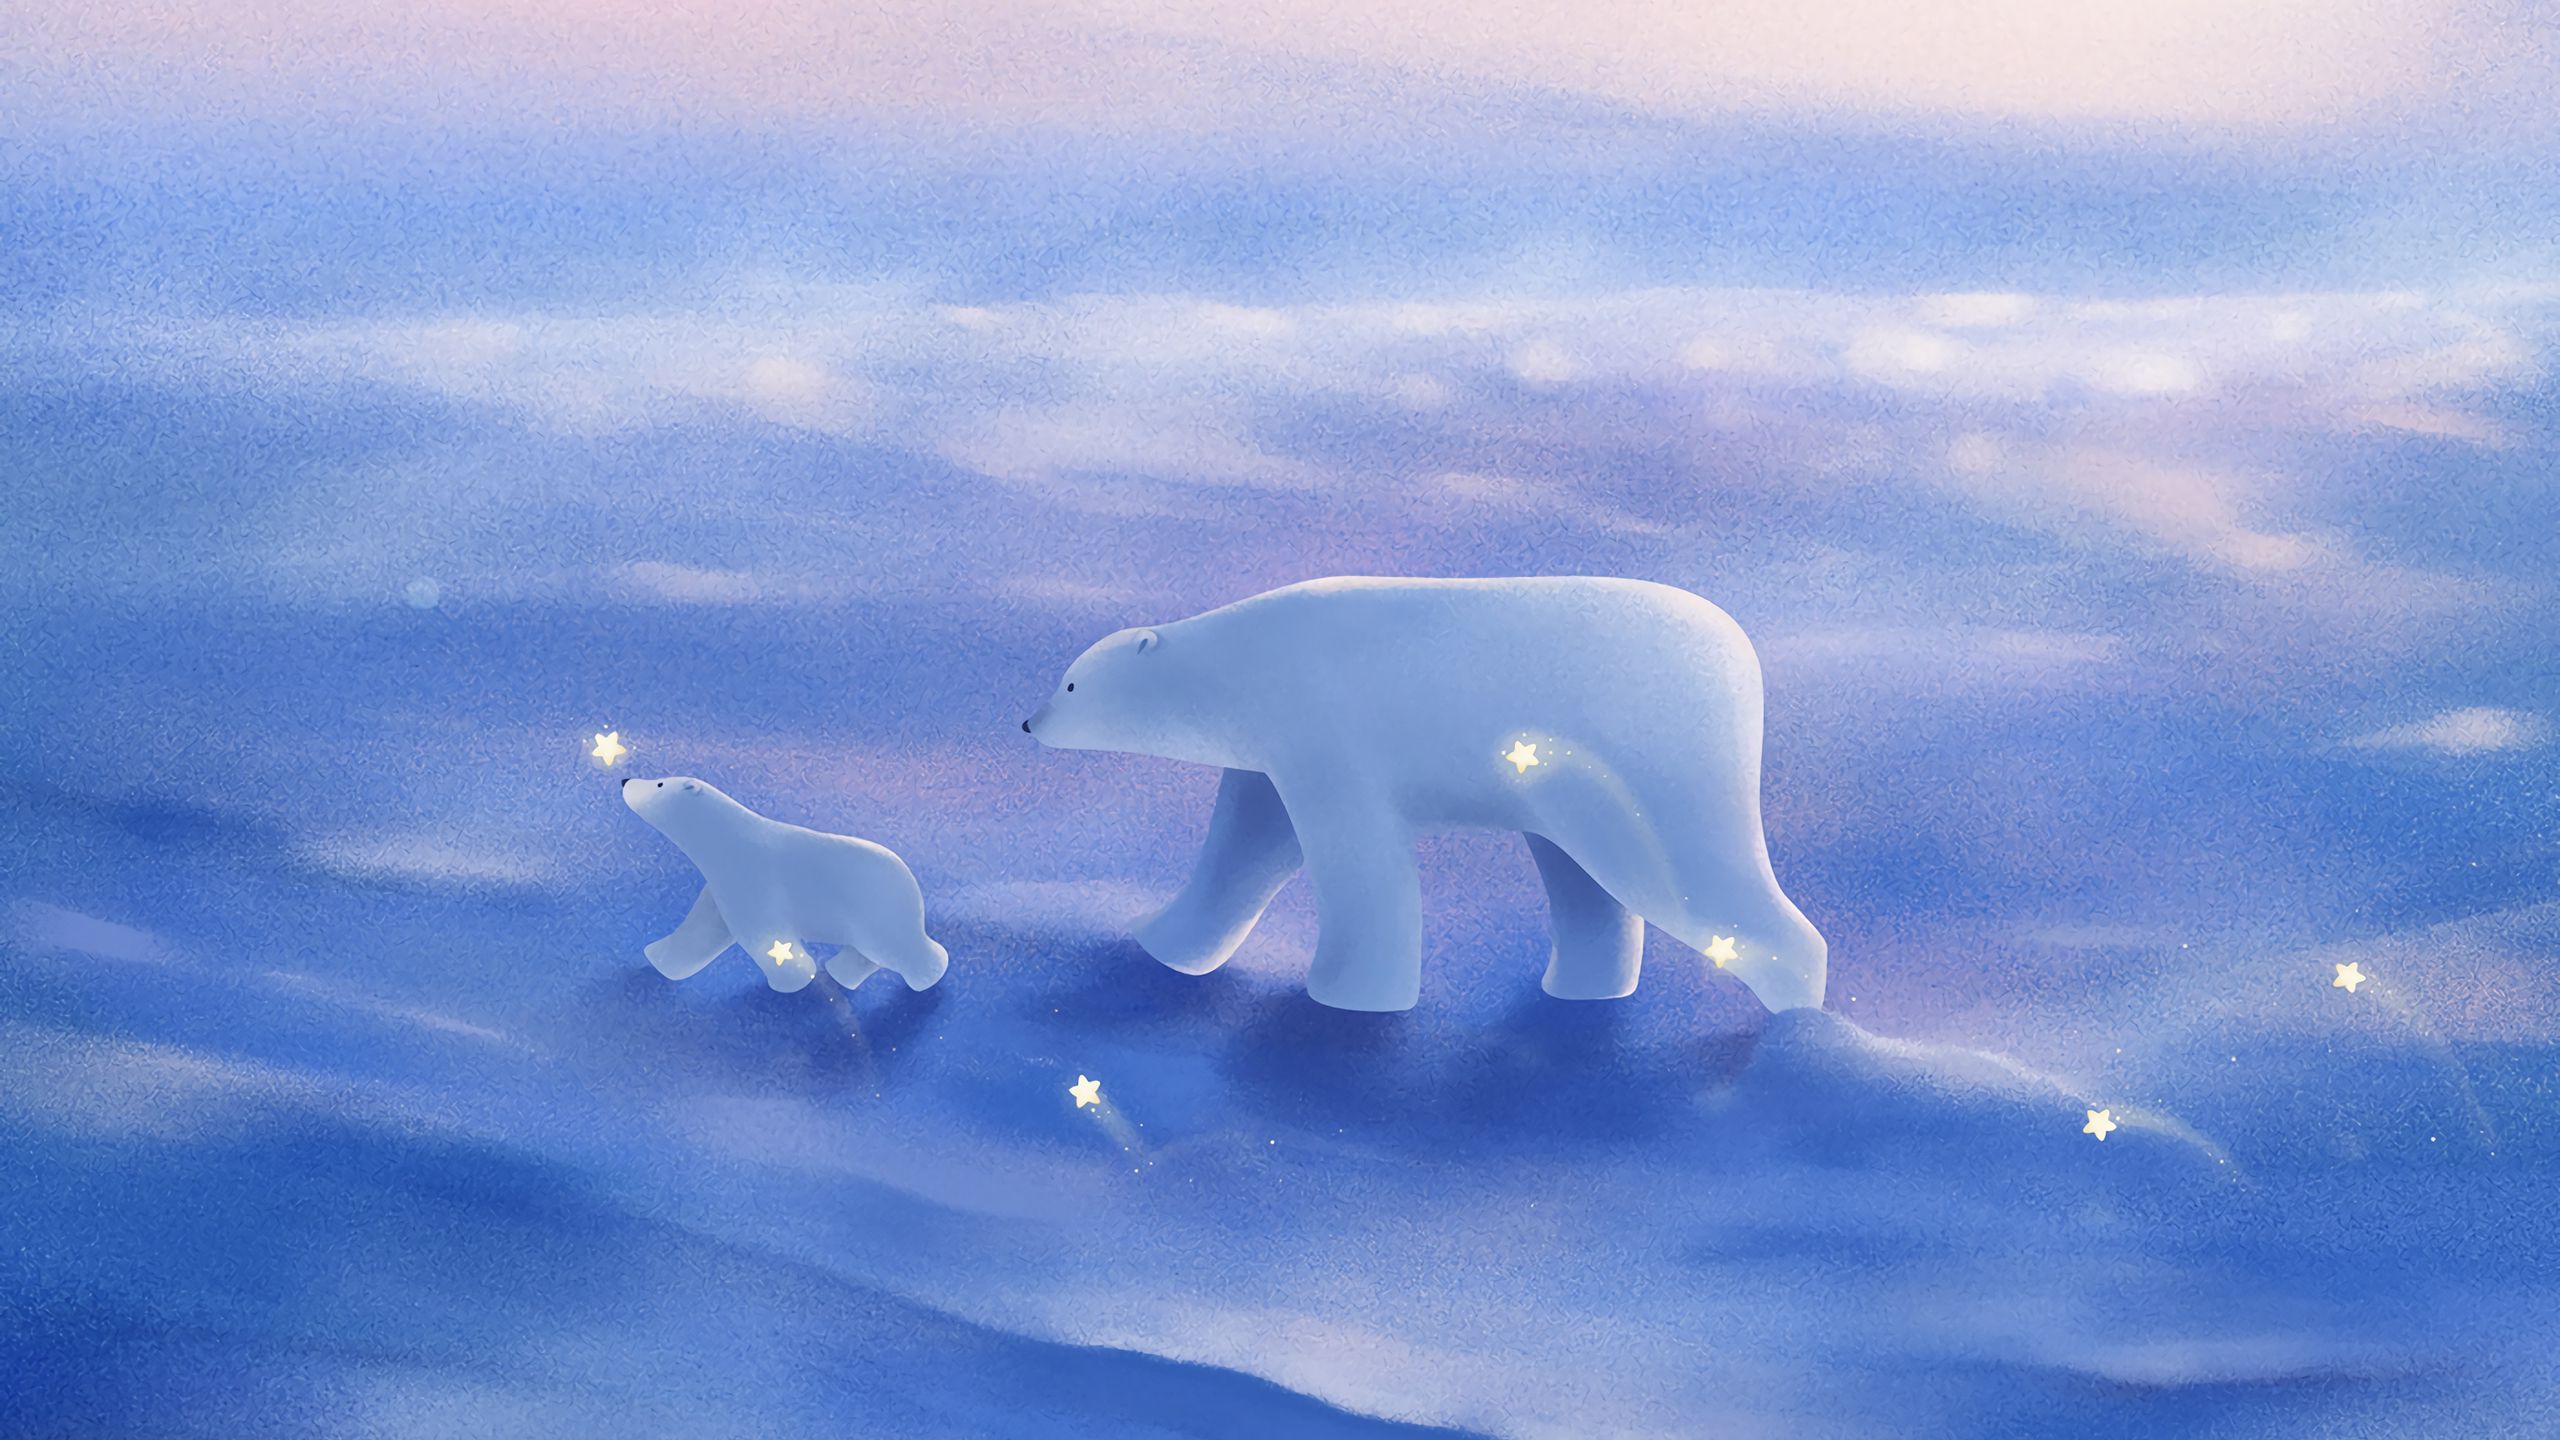 Download wallpaper 2560x1440 polar bears, family, cub, art, walk widescreen 16:9 HD background